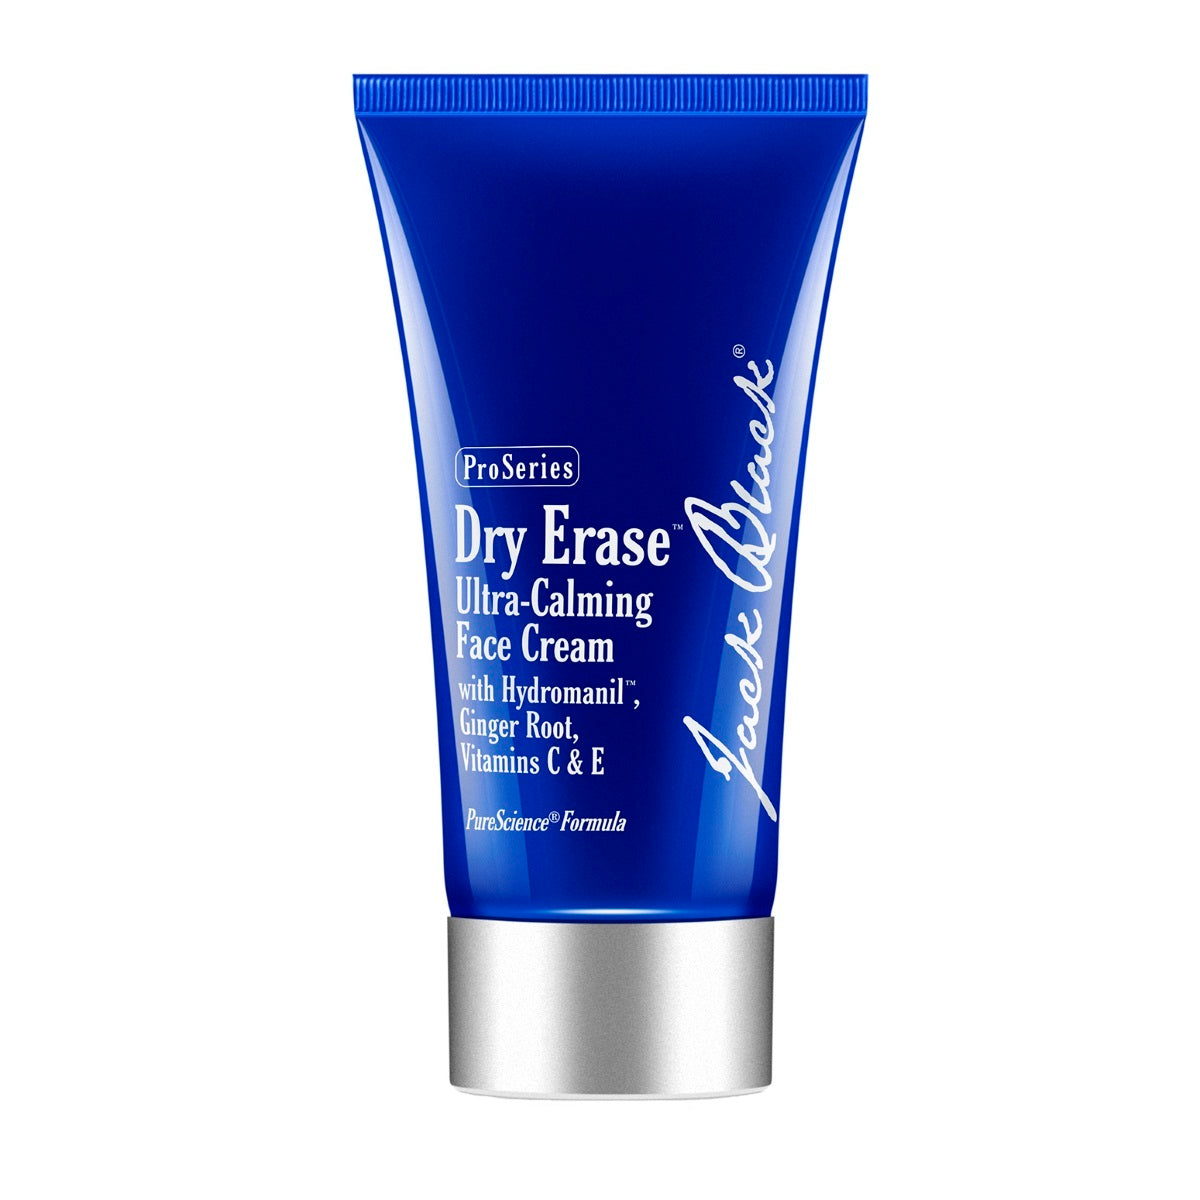 Primary image of Dry Erase Ultra-Calming Face Cream